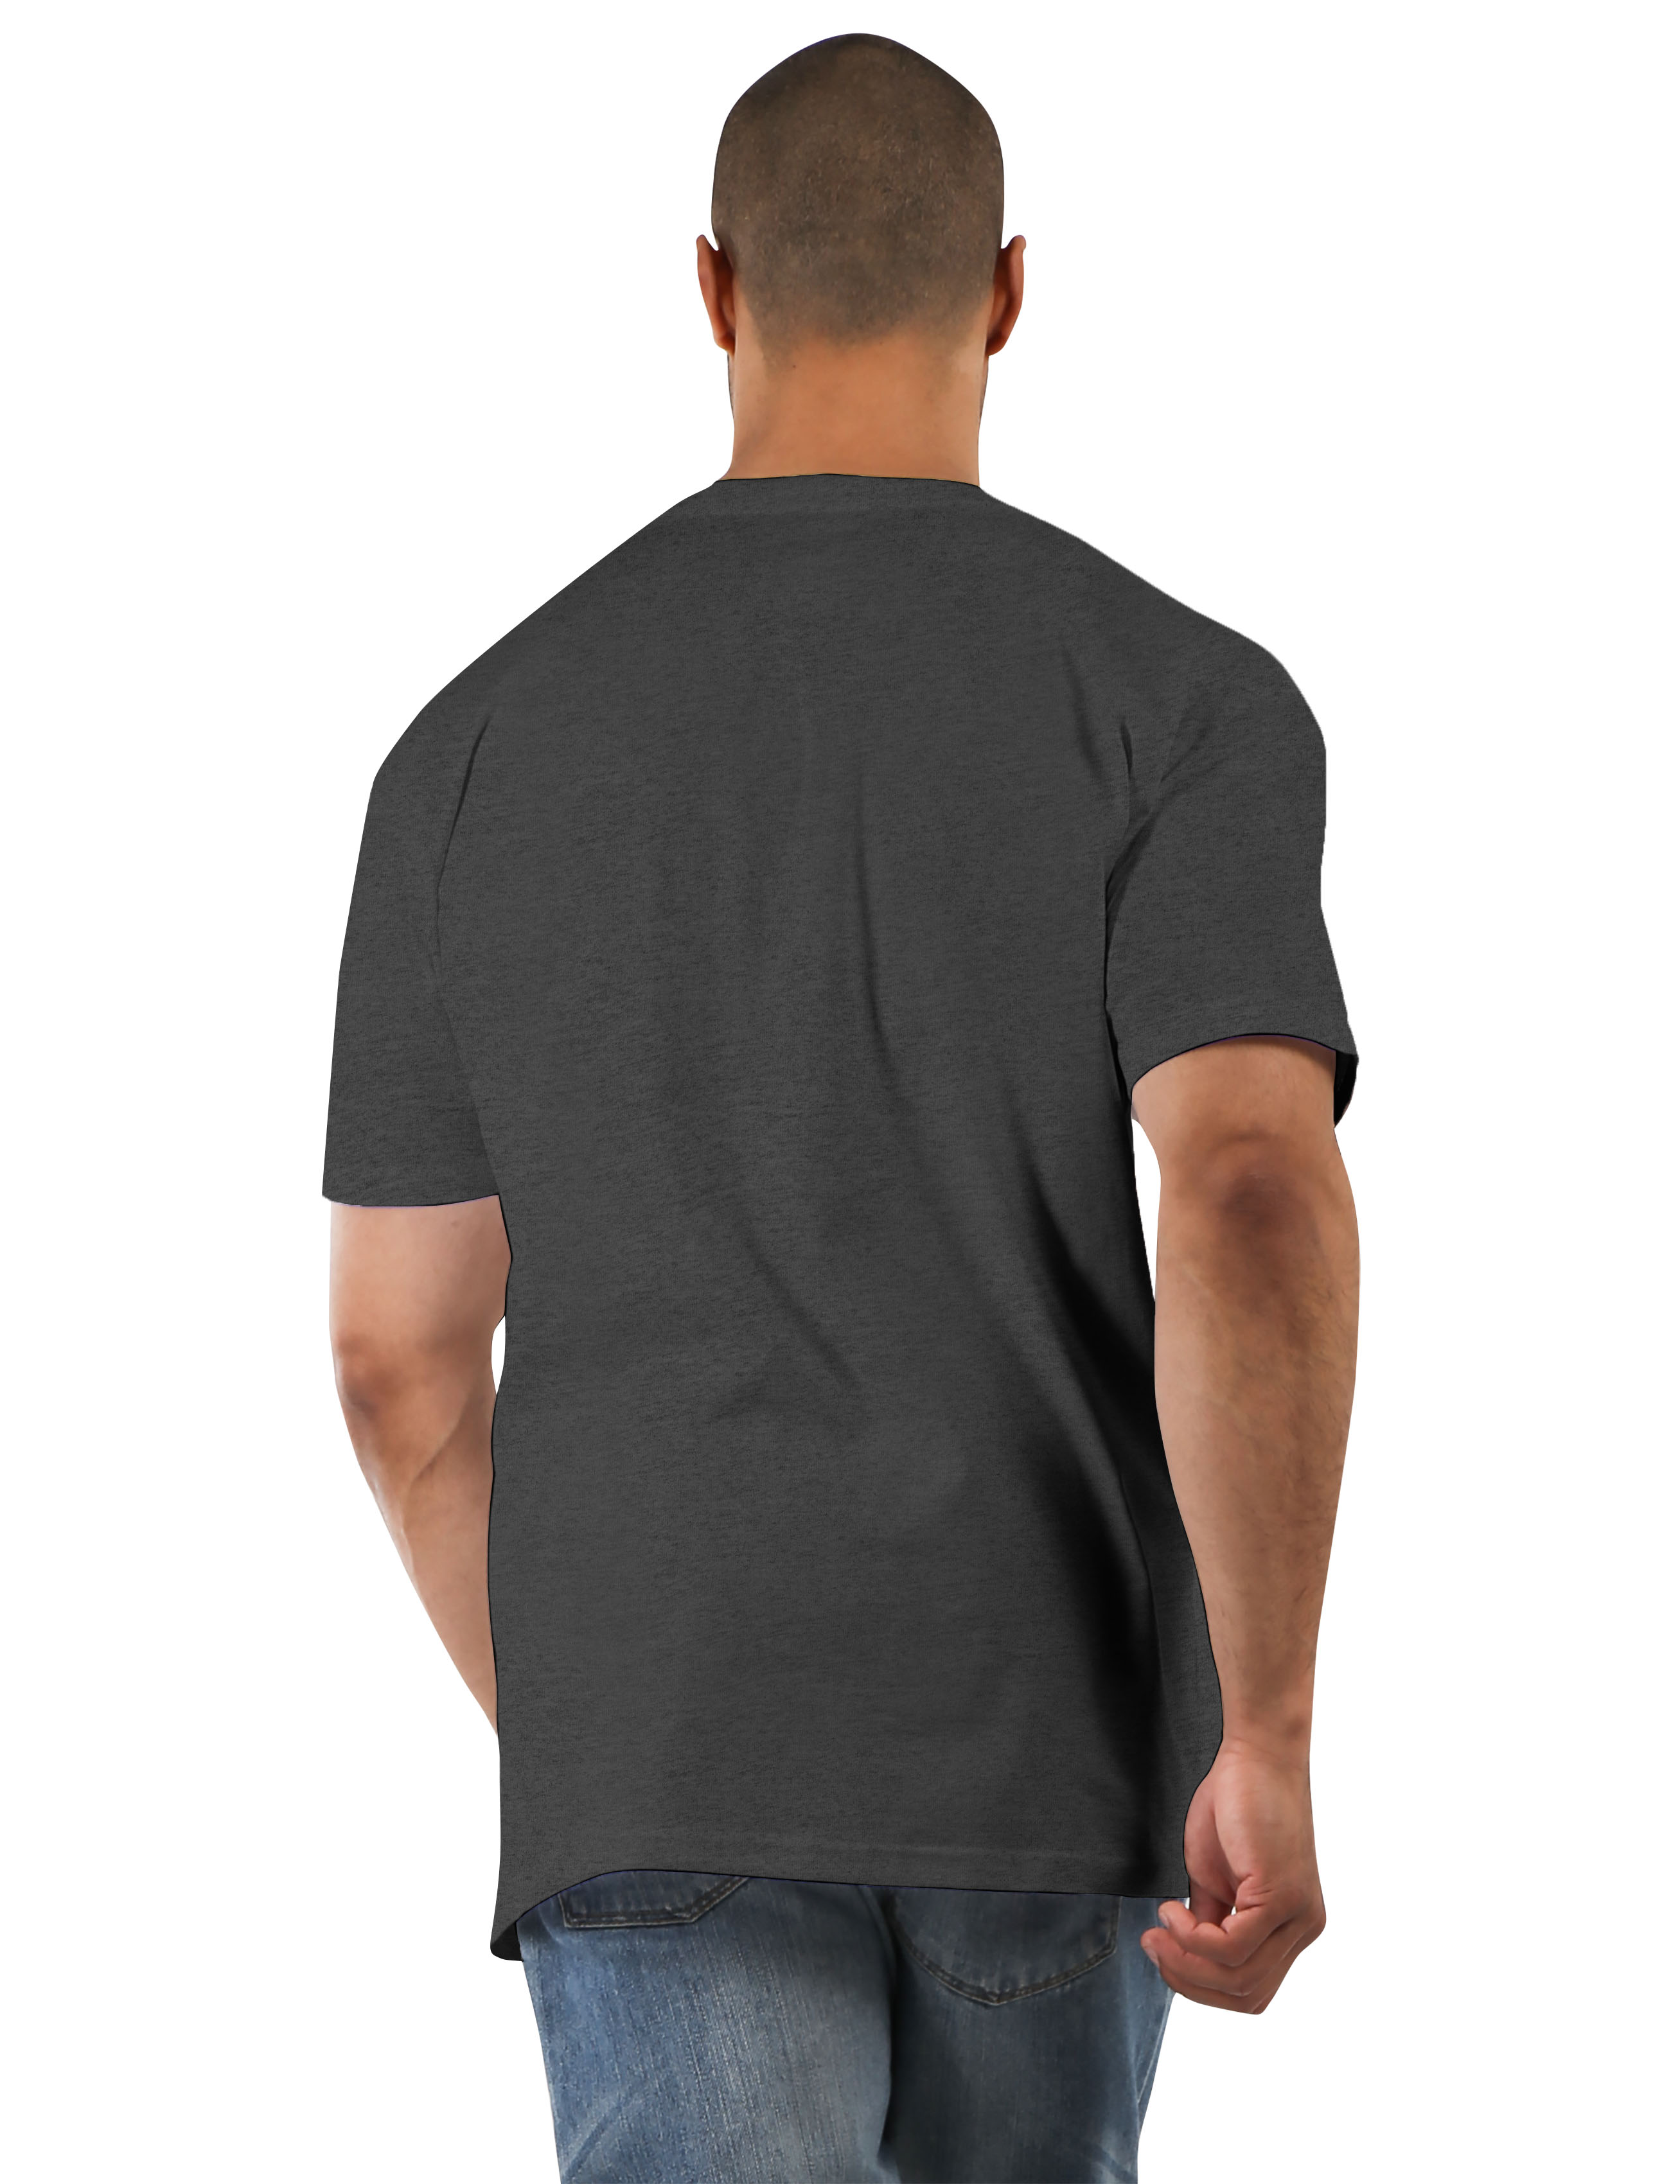 Ma Croix Mens Premium Pocket Tee Lightweight Cotton Workwear Crewneck Short Sleeve T Shirt - image 2 of 6